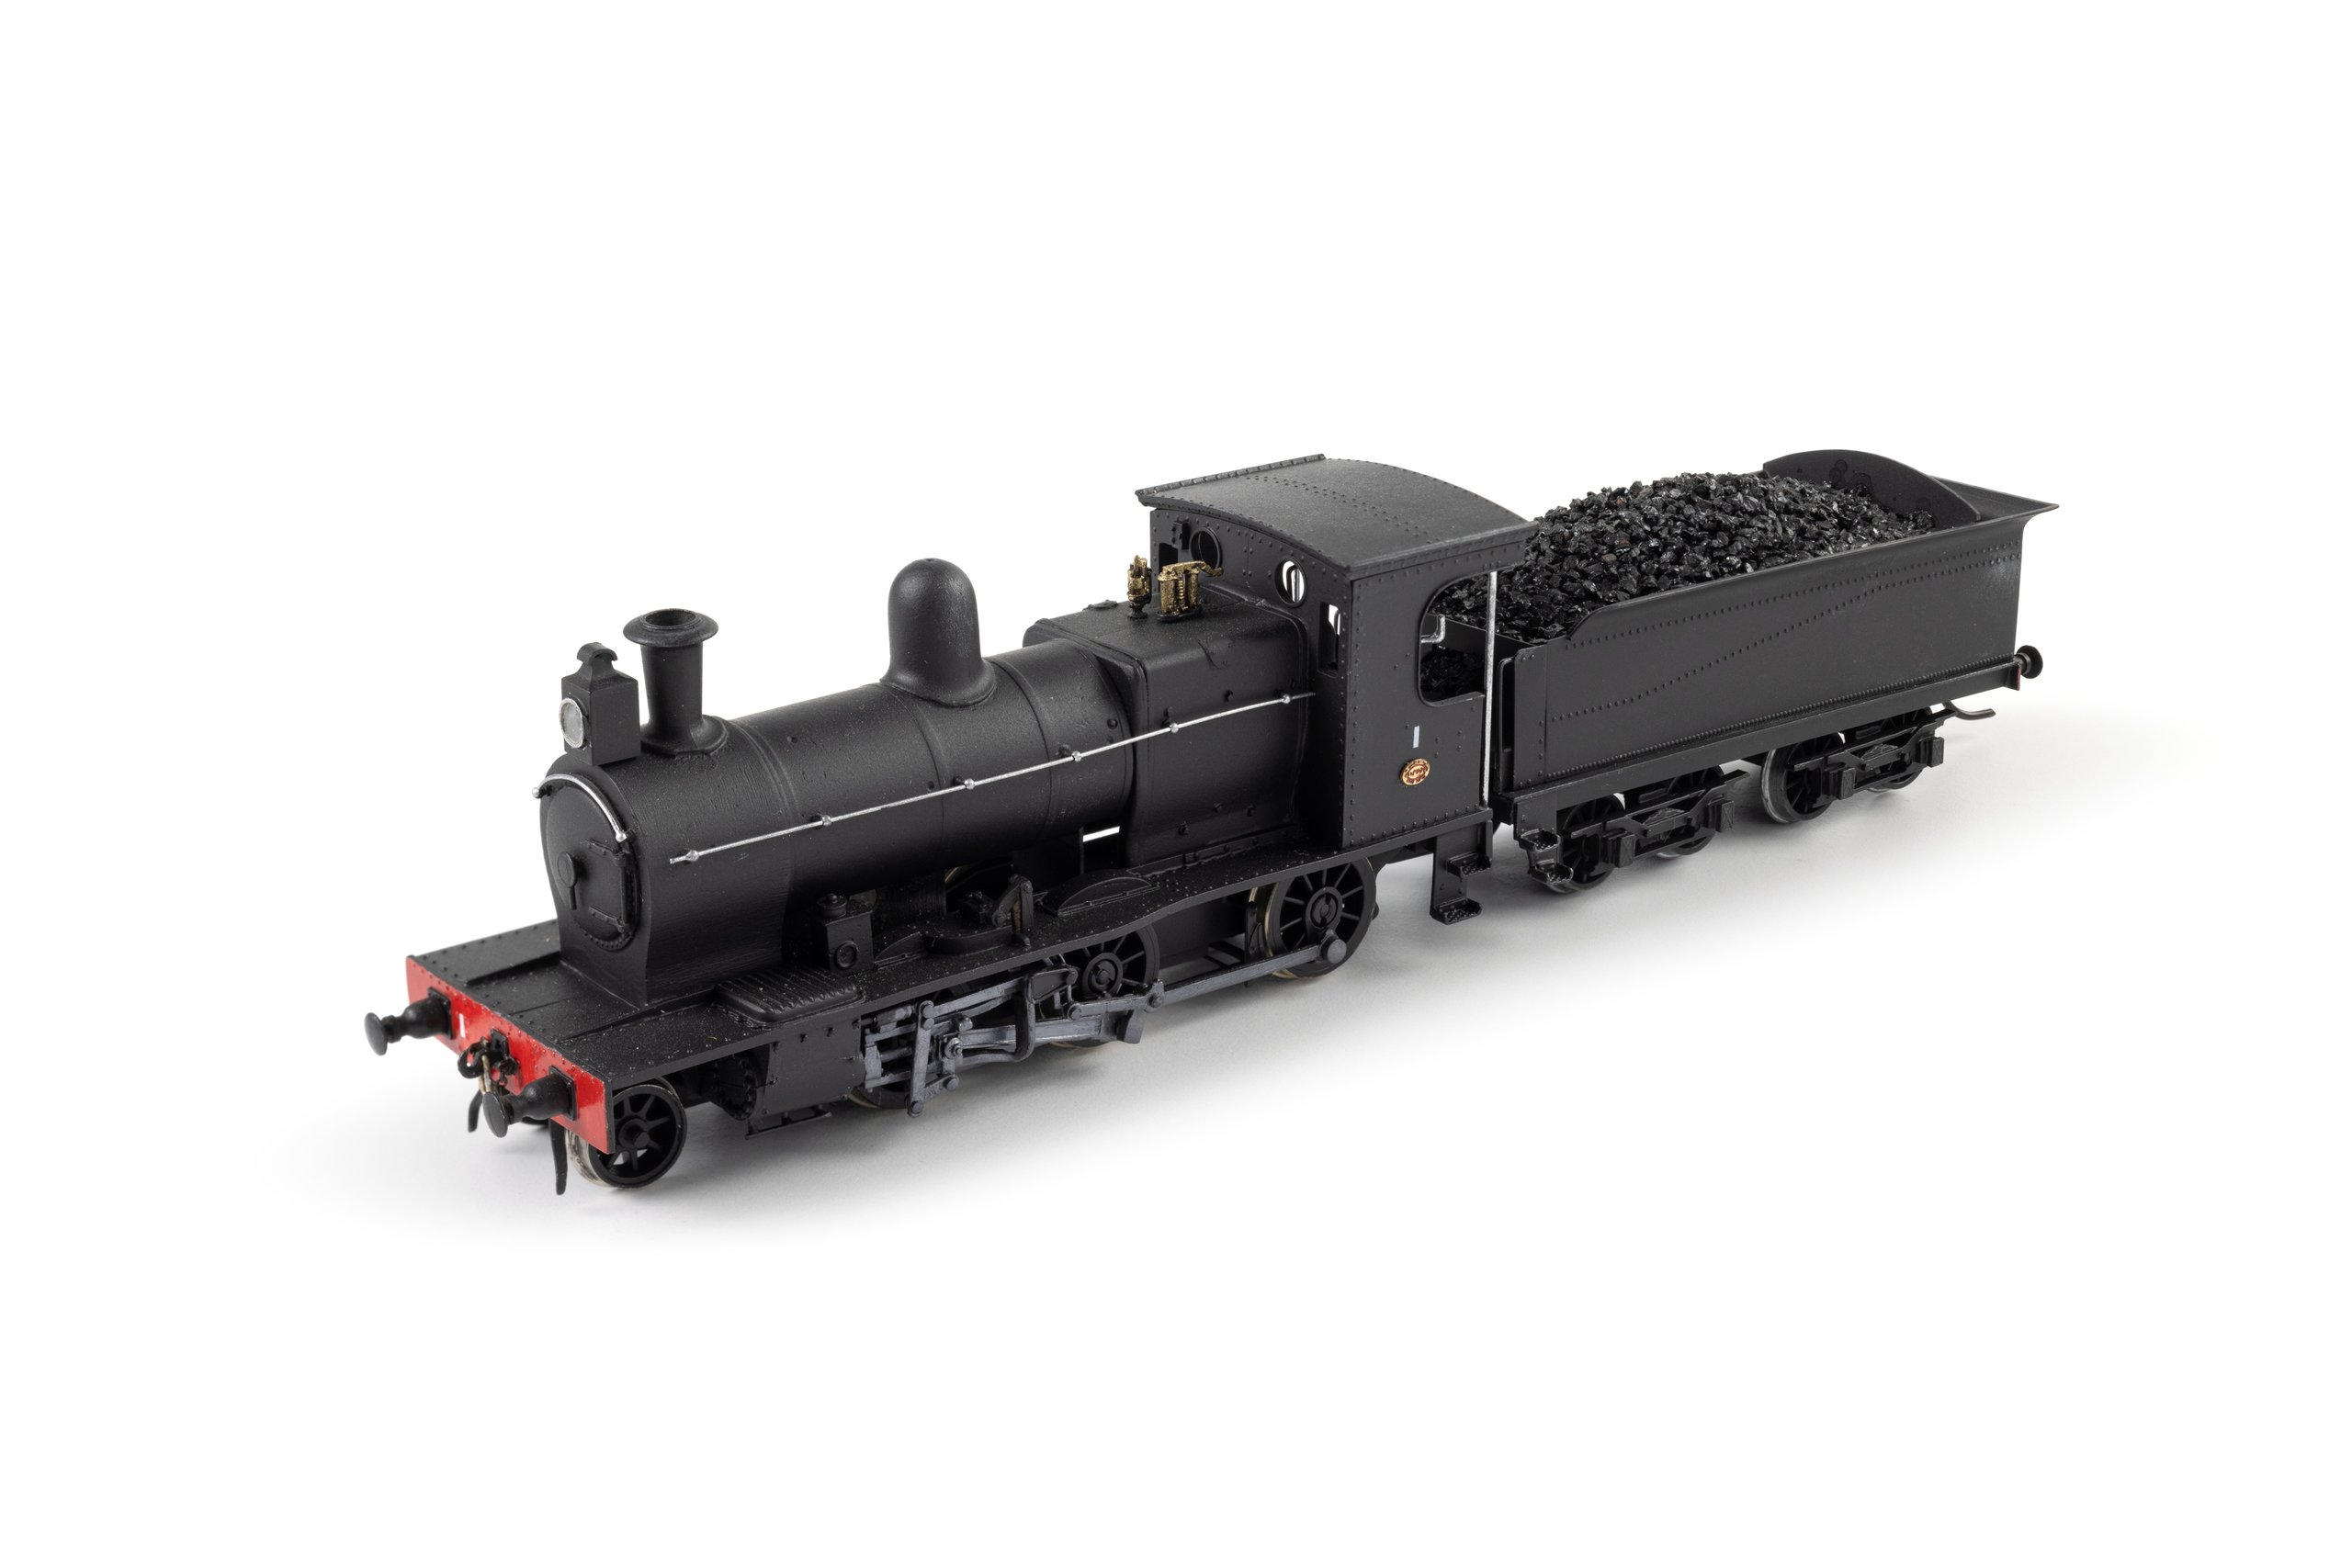 Model of PWD steam locomotive No.1